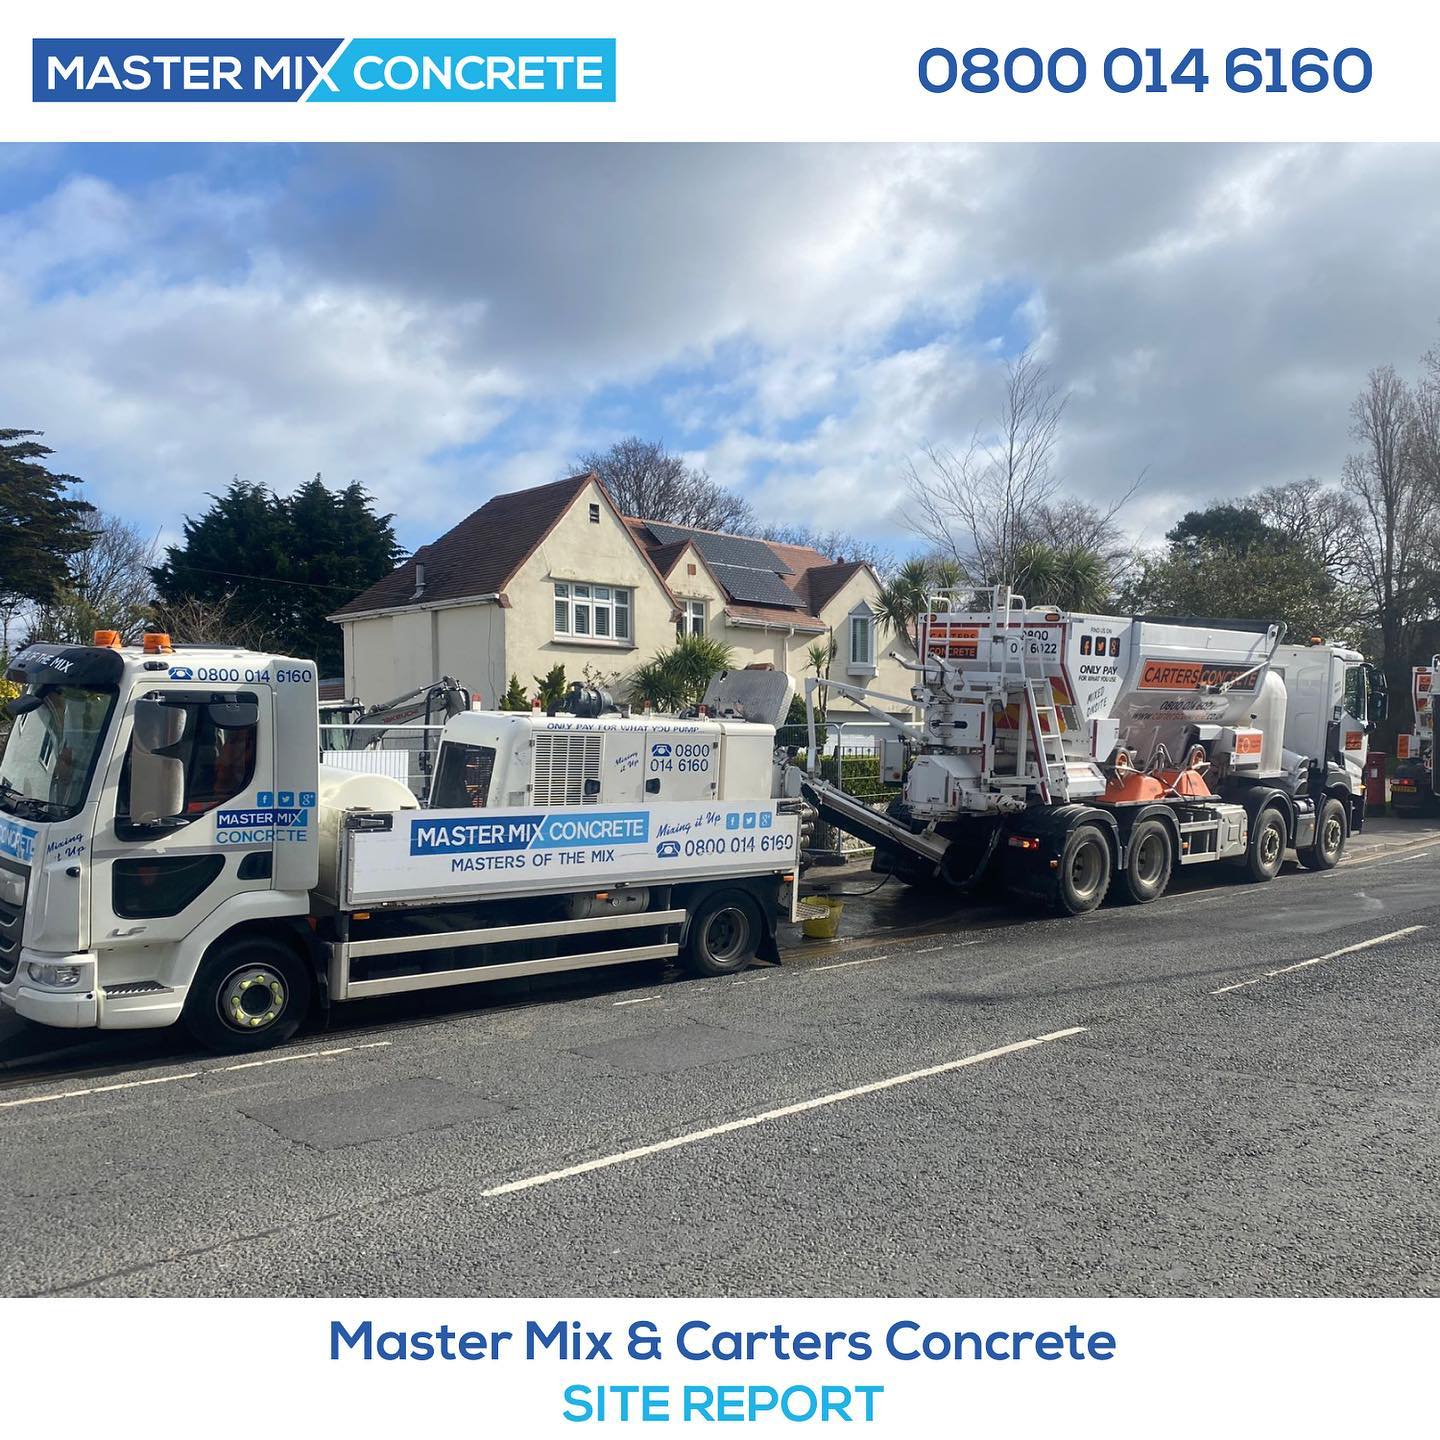 A Master Mix Concrete site report